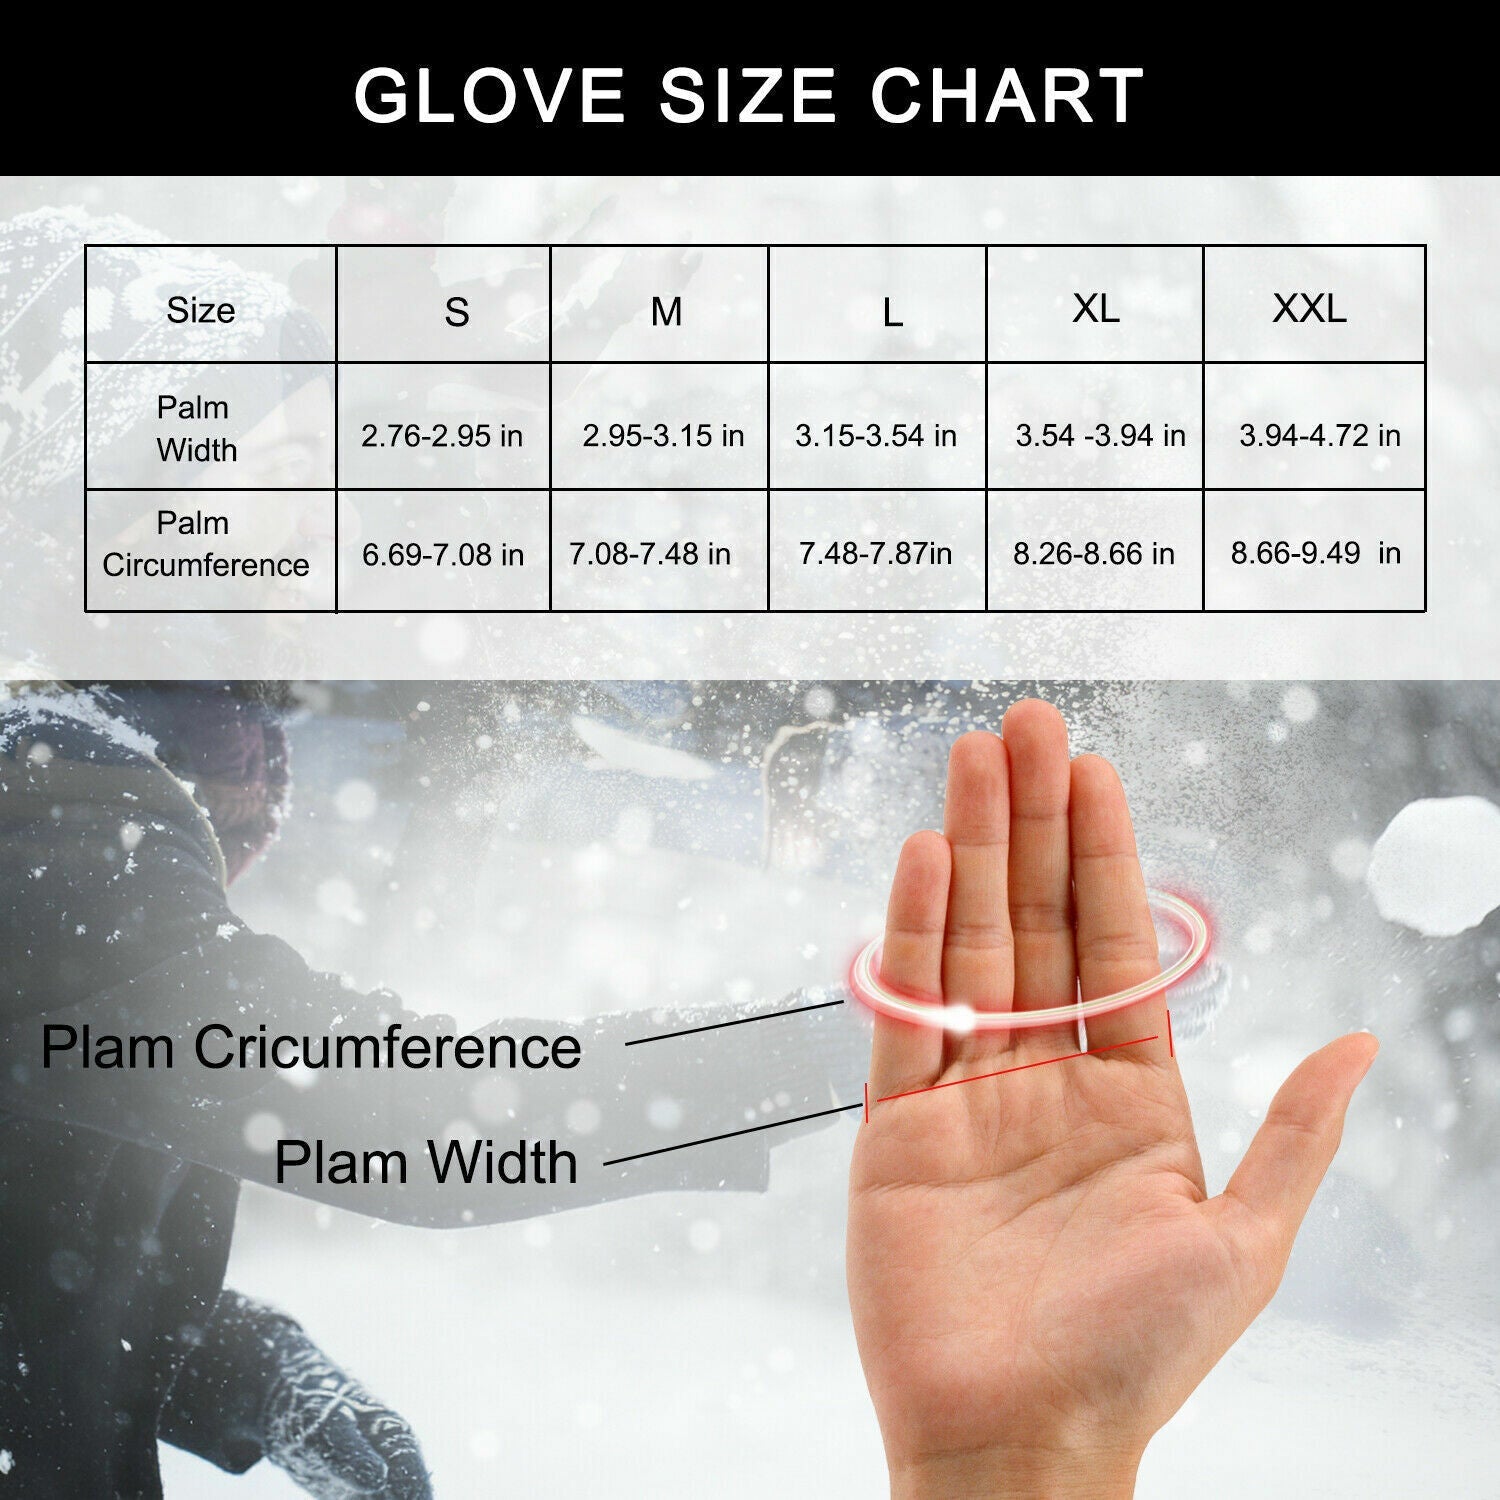 ROCKBROS Winter Full Finger Cycling Sporting Gloves SBR Touchscreen Warm Gloves